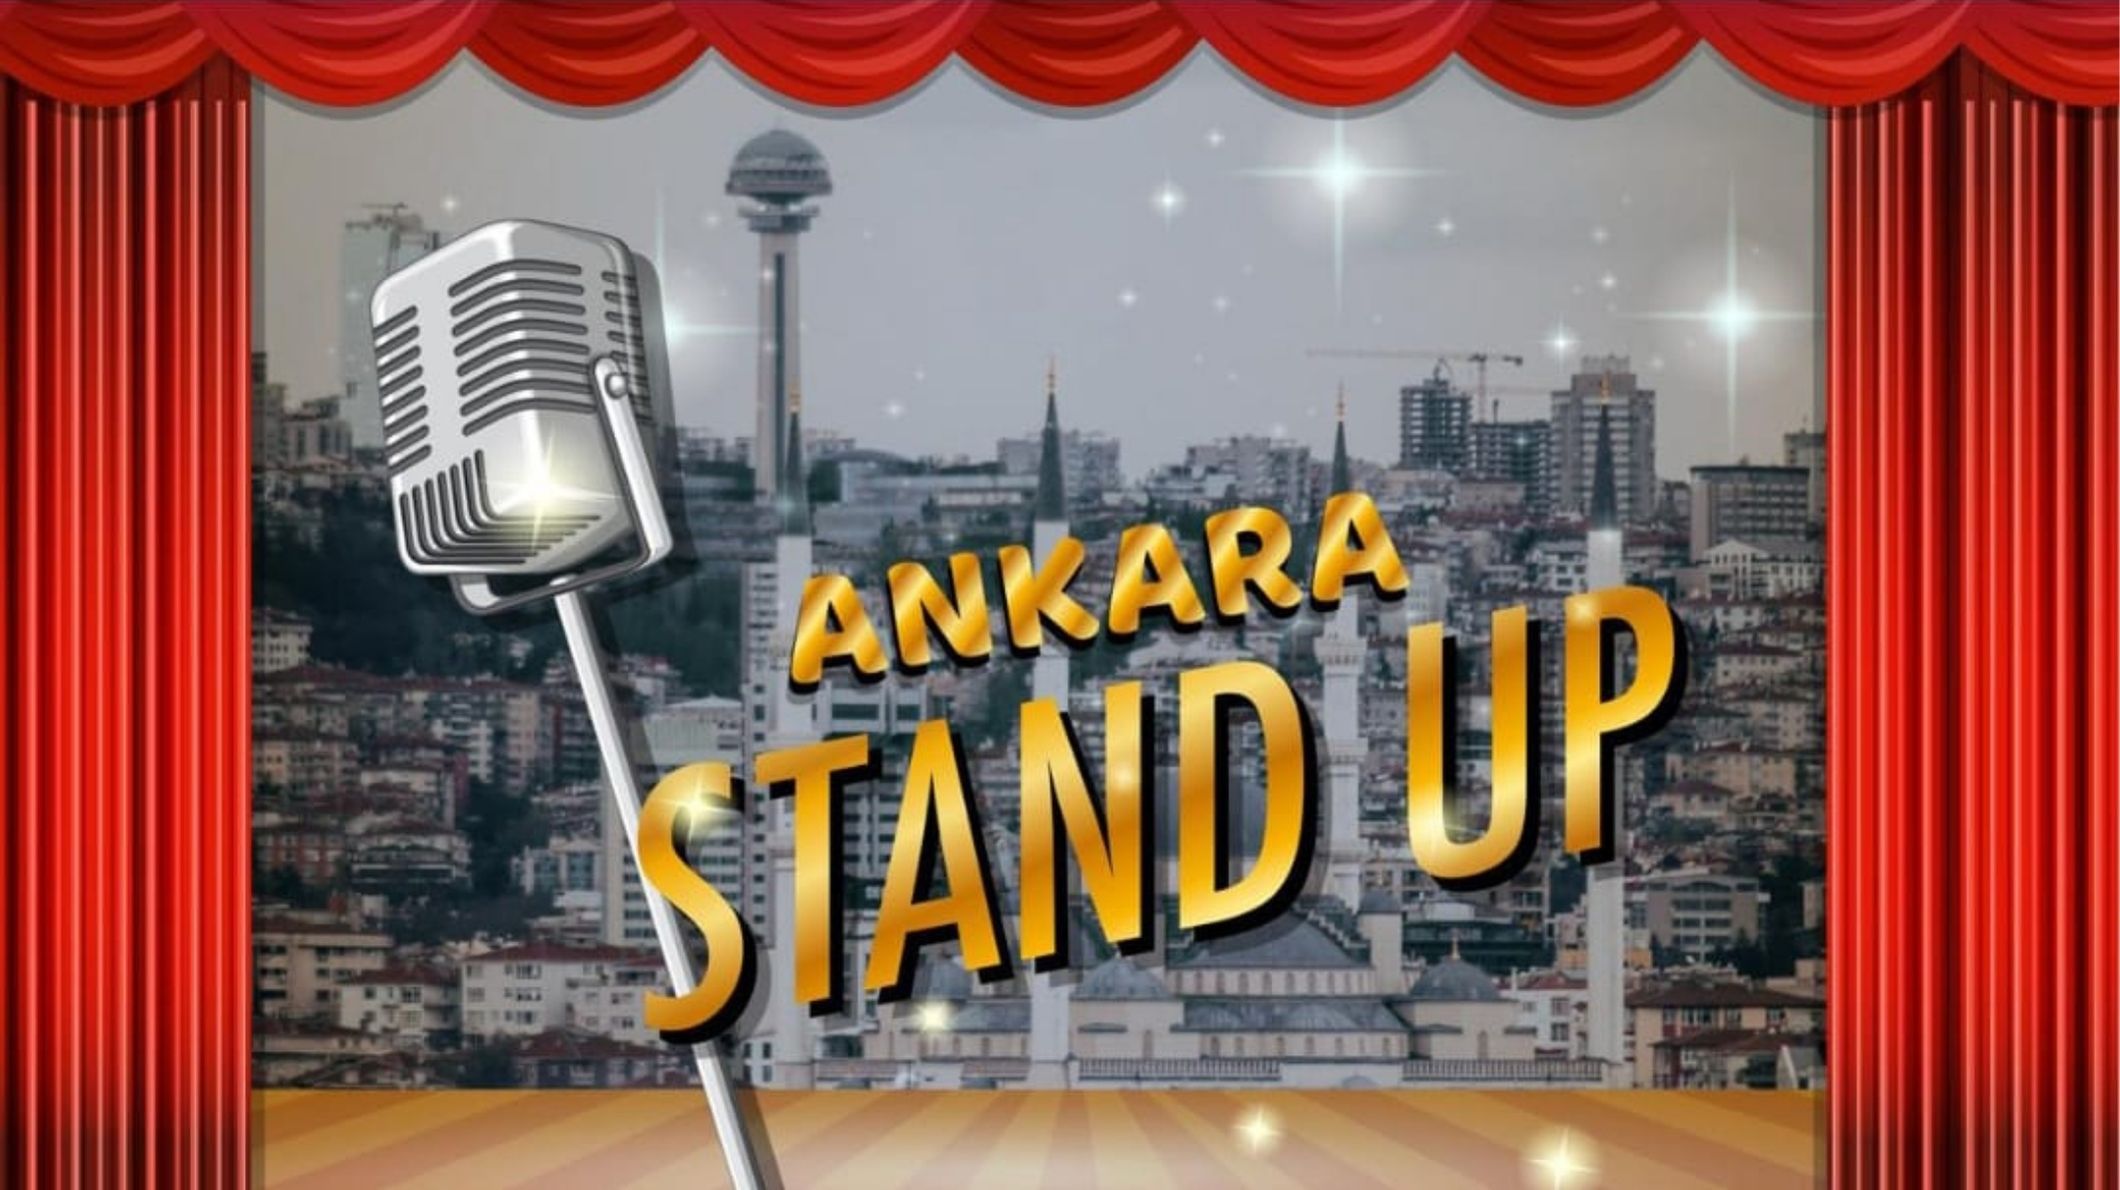 Ankara Stand Up Gecesi - Ankara - Haymatlos Mekan - Ankara